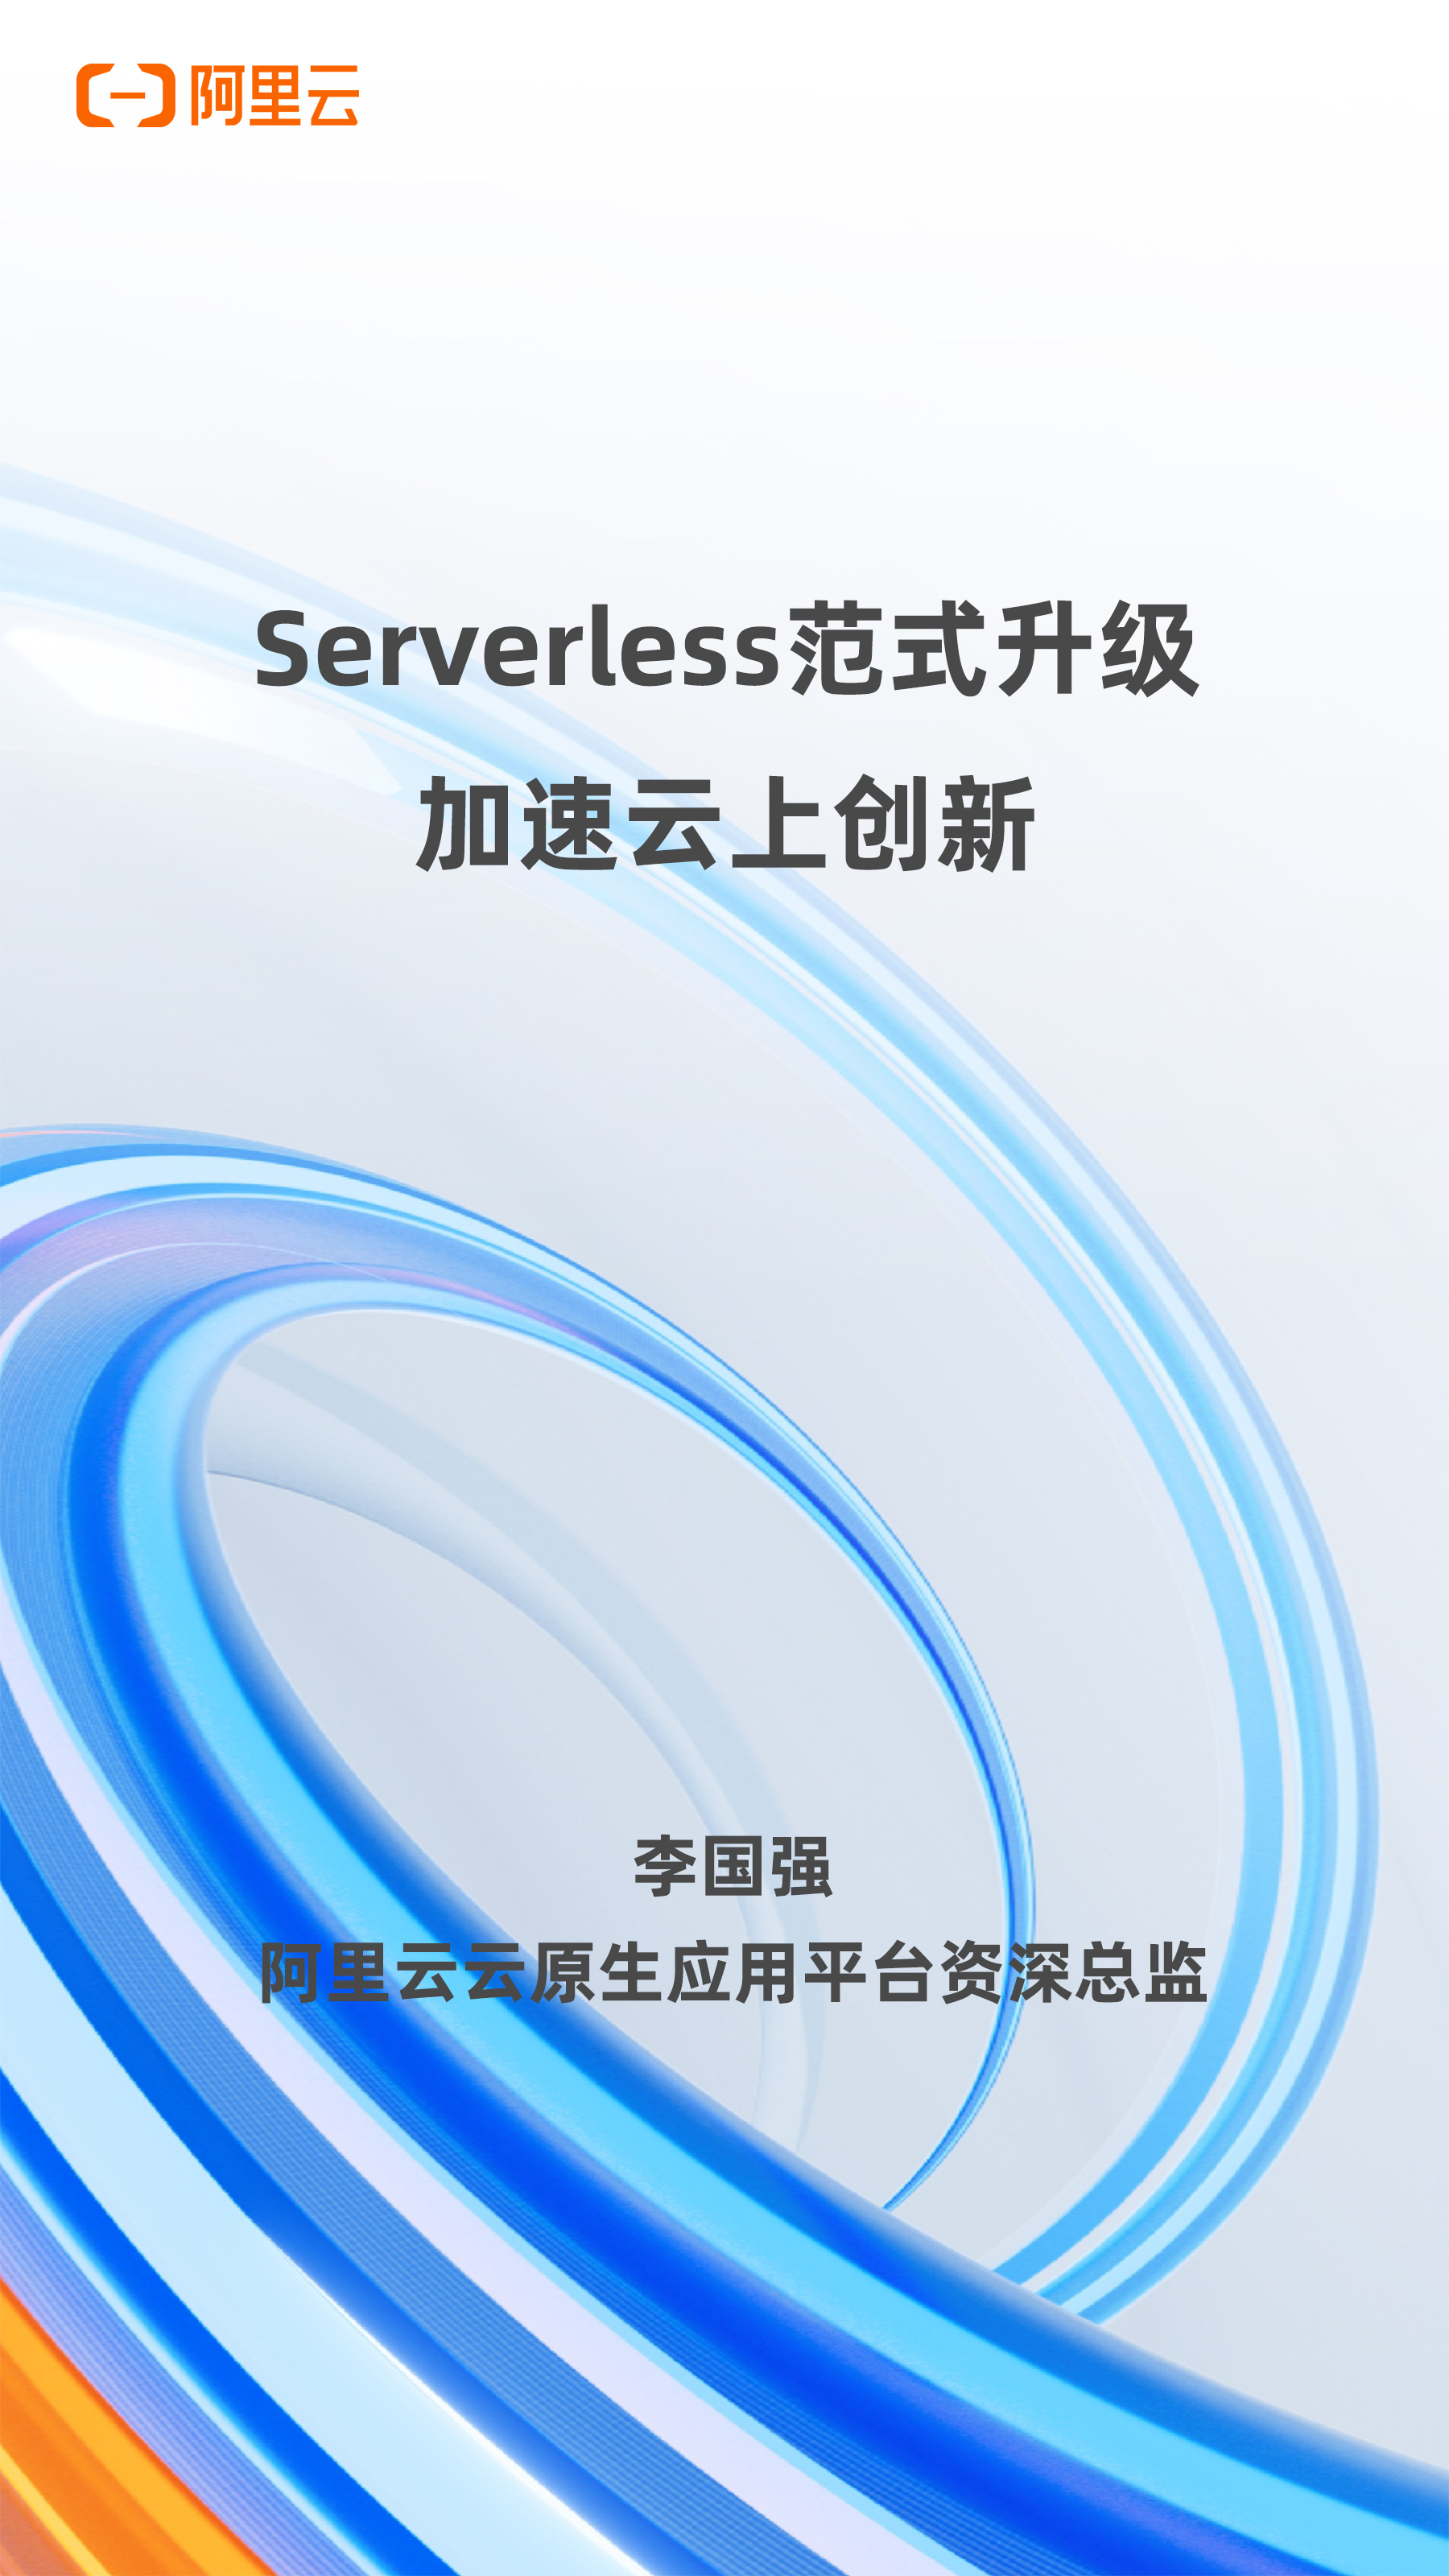 Serverless 范式升级 加速云上创新